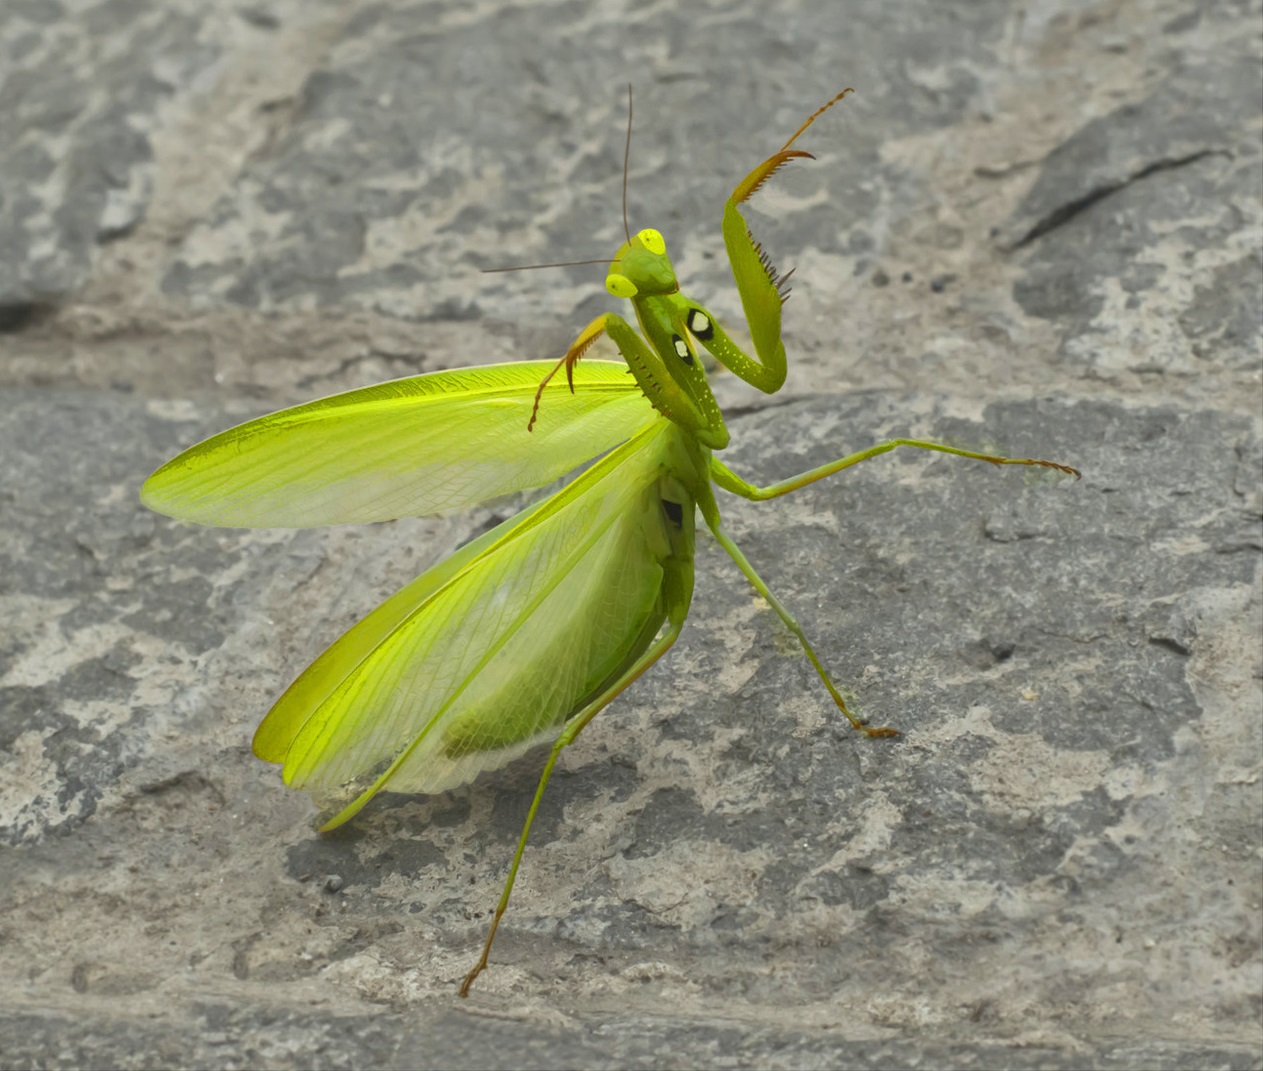 Mantis ordinaria, o mantis religiosa (lat. Mantis religiosa)